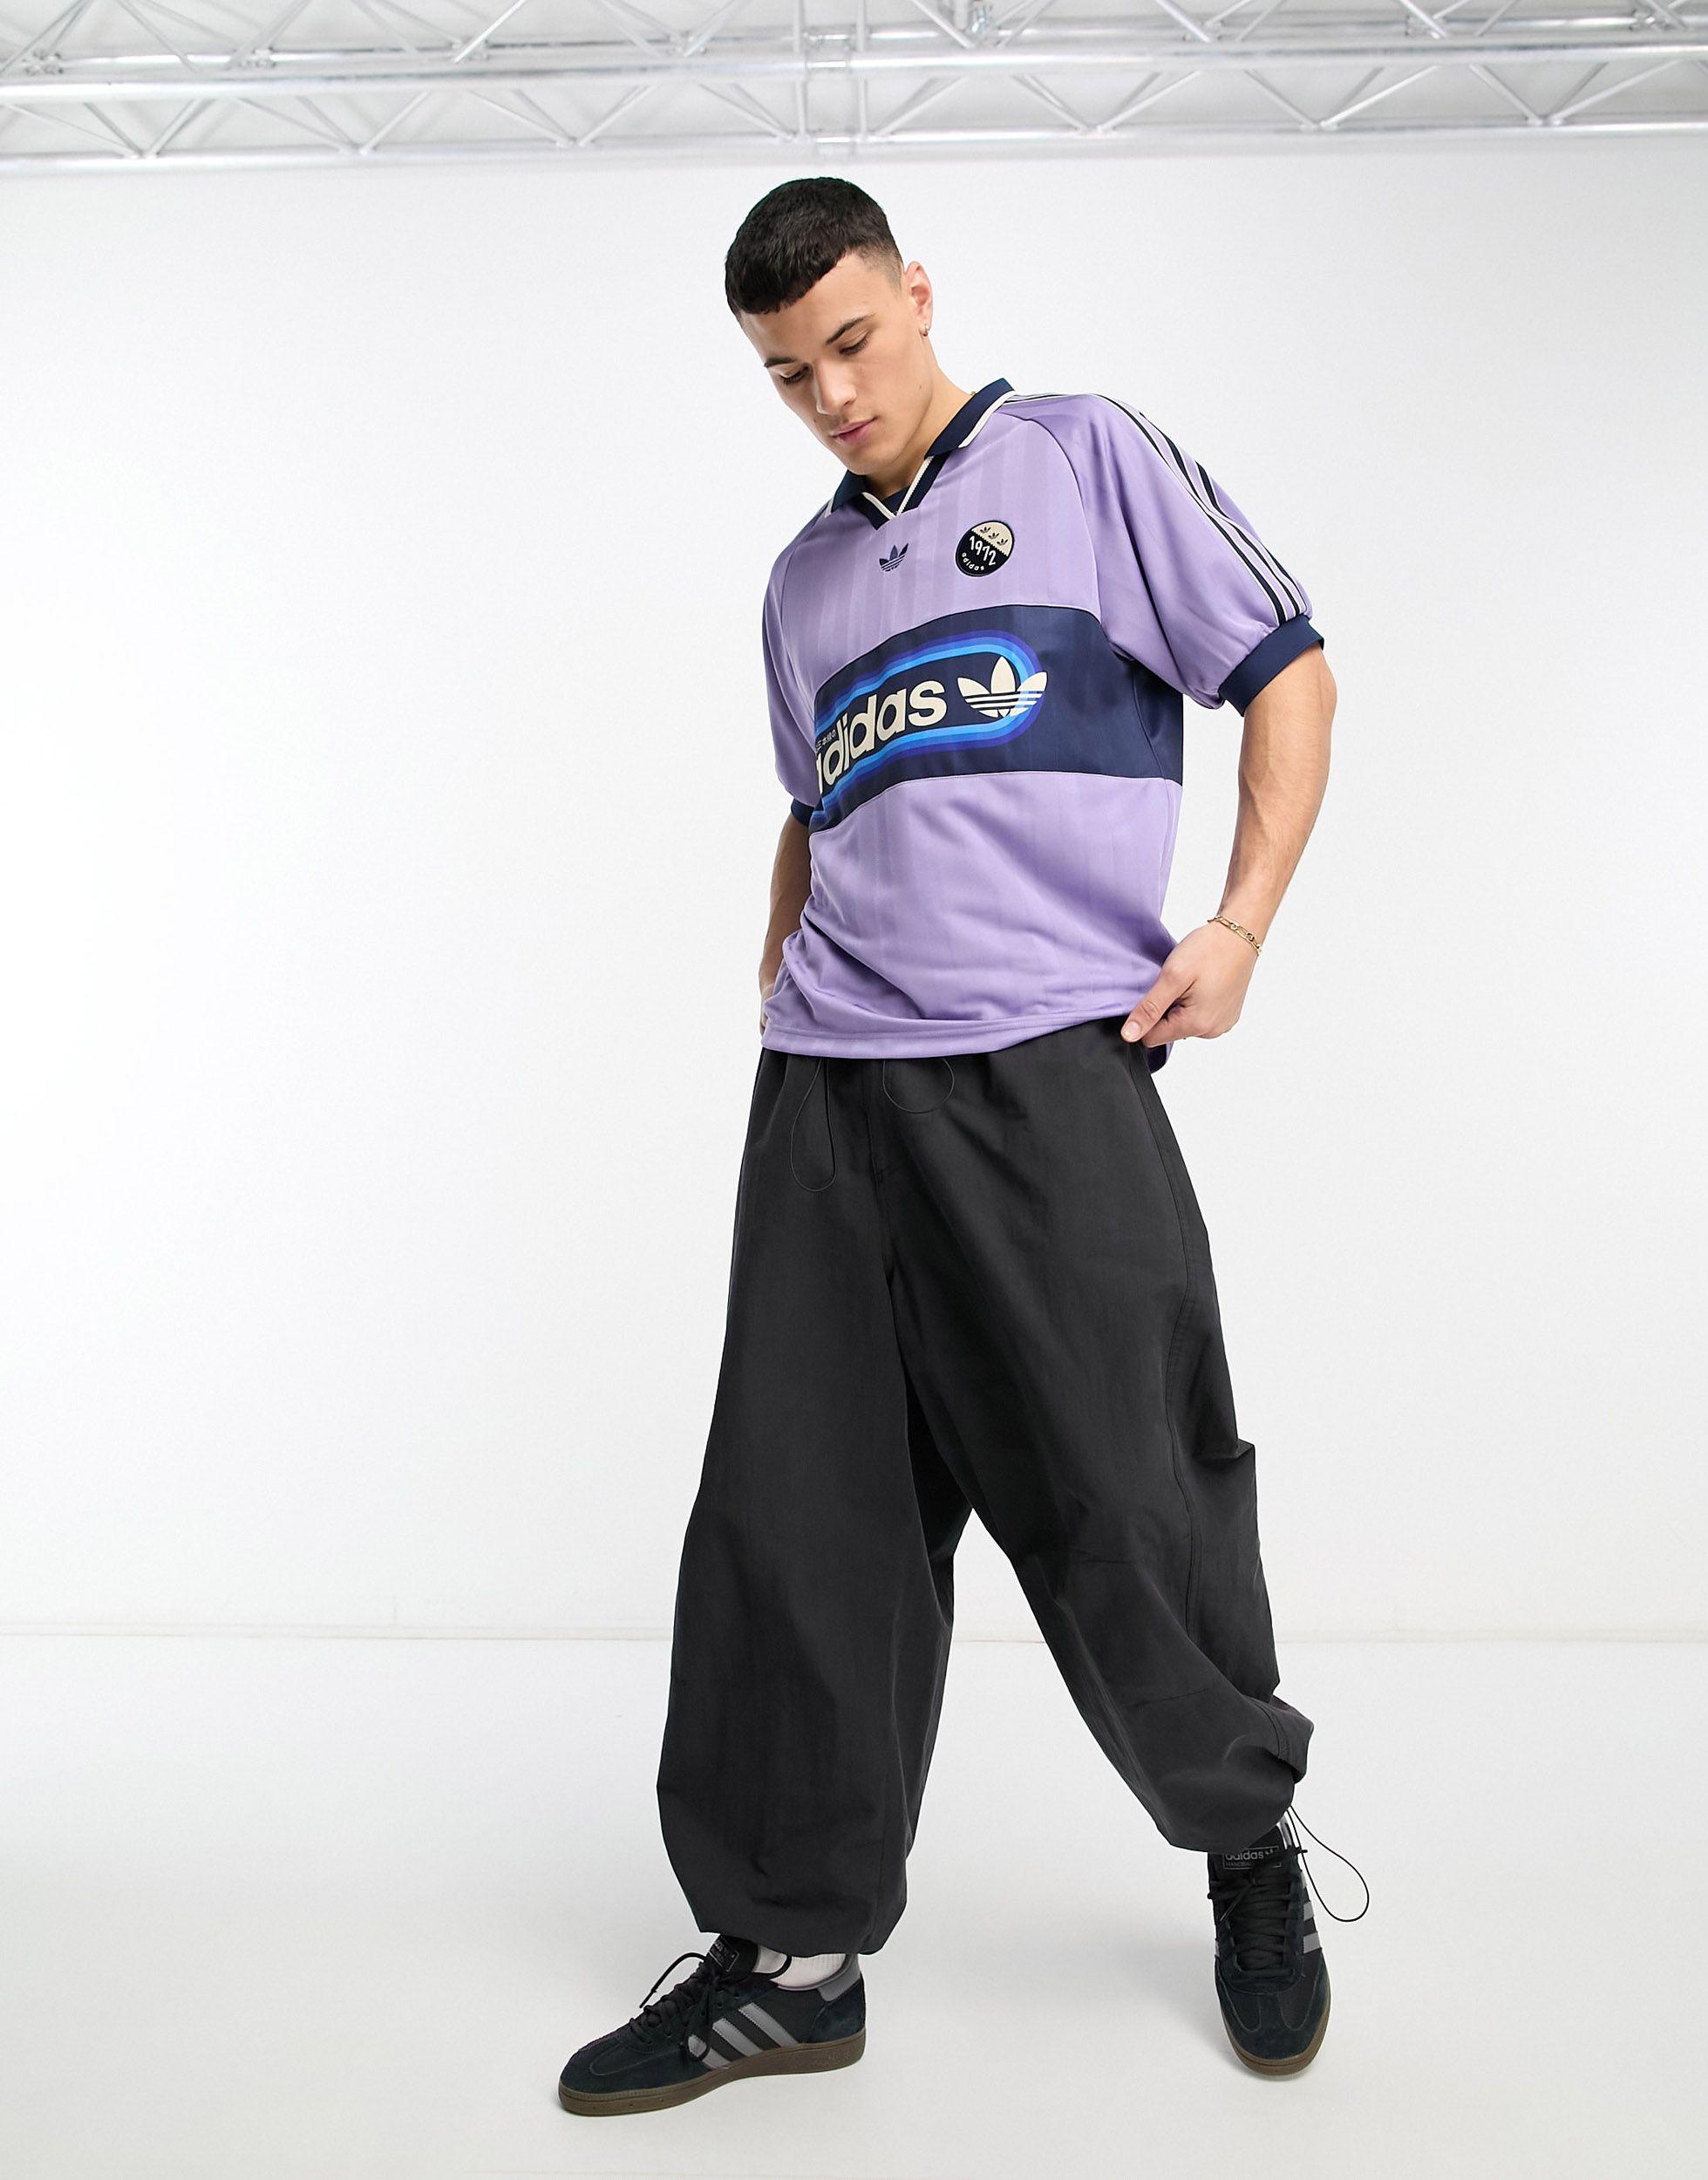 adidas Originals Bloke Pop Retro Football Jersey in Purple for Men